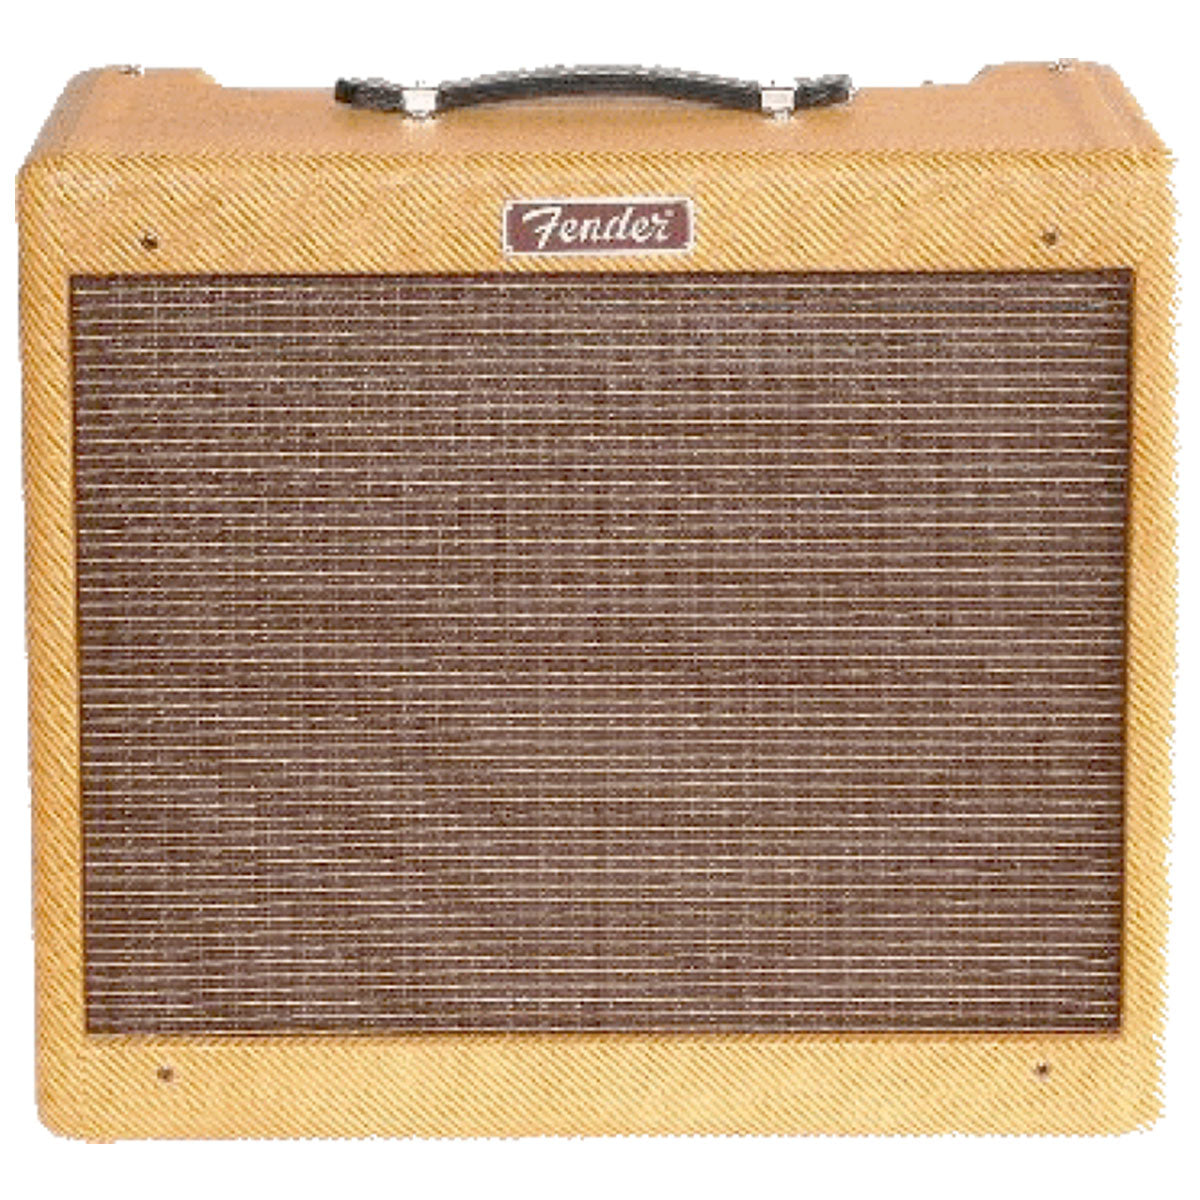 Fender Blues Junior Guitar Amplifier Amp Lacquered Tweed JENSEN C12N 1x12inch Jr - 0213235700